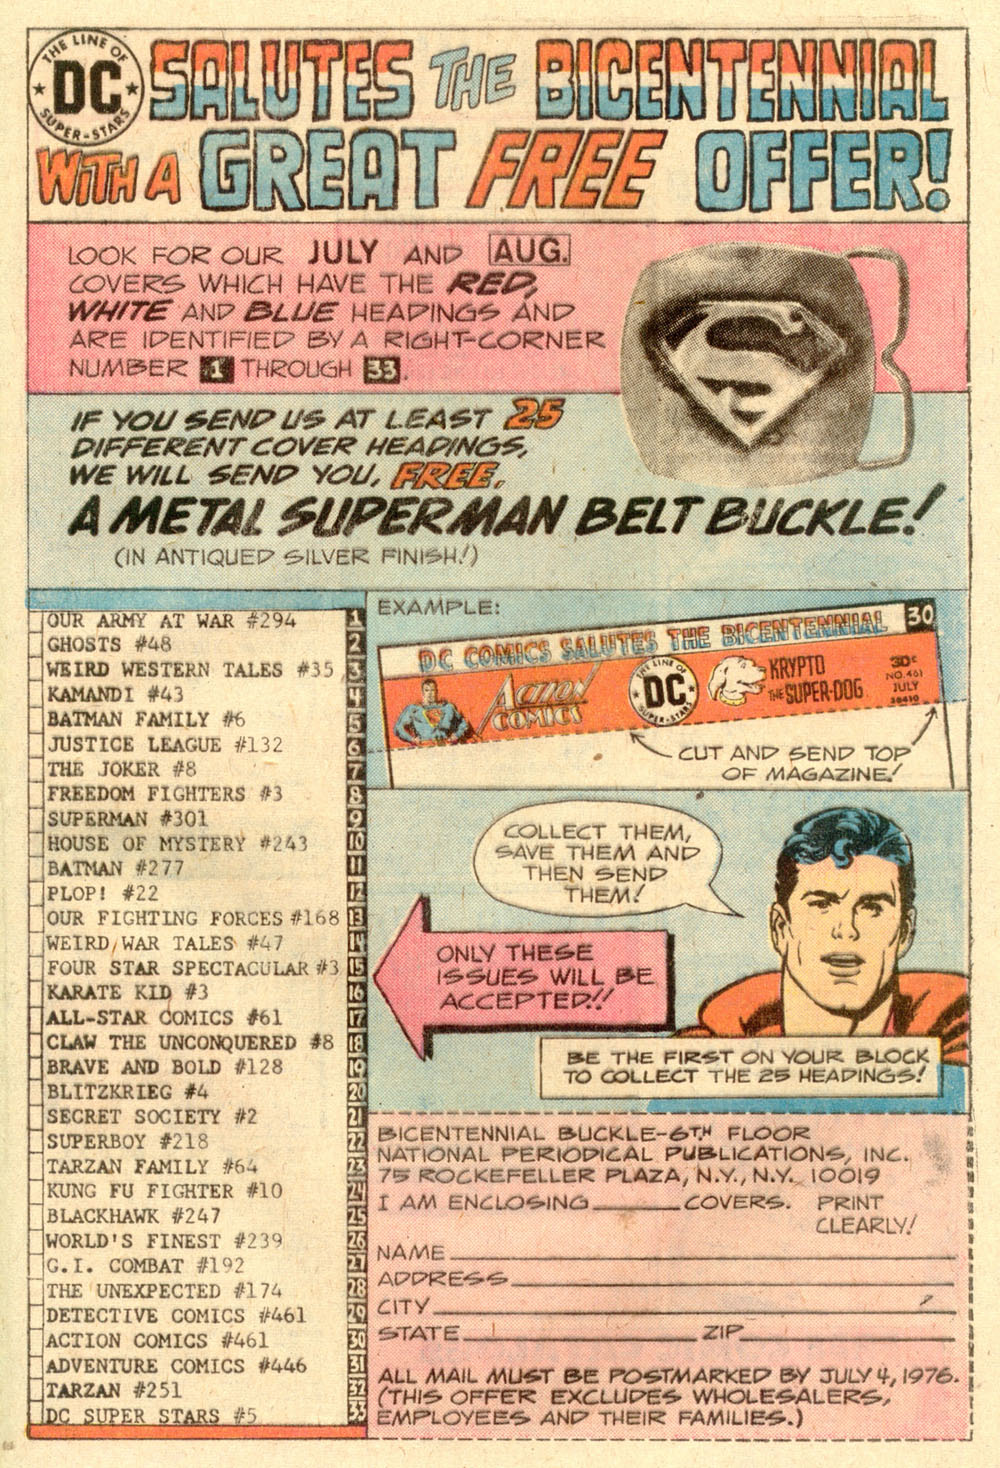 [superman+belt+buckle.jpg]